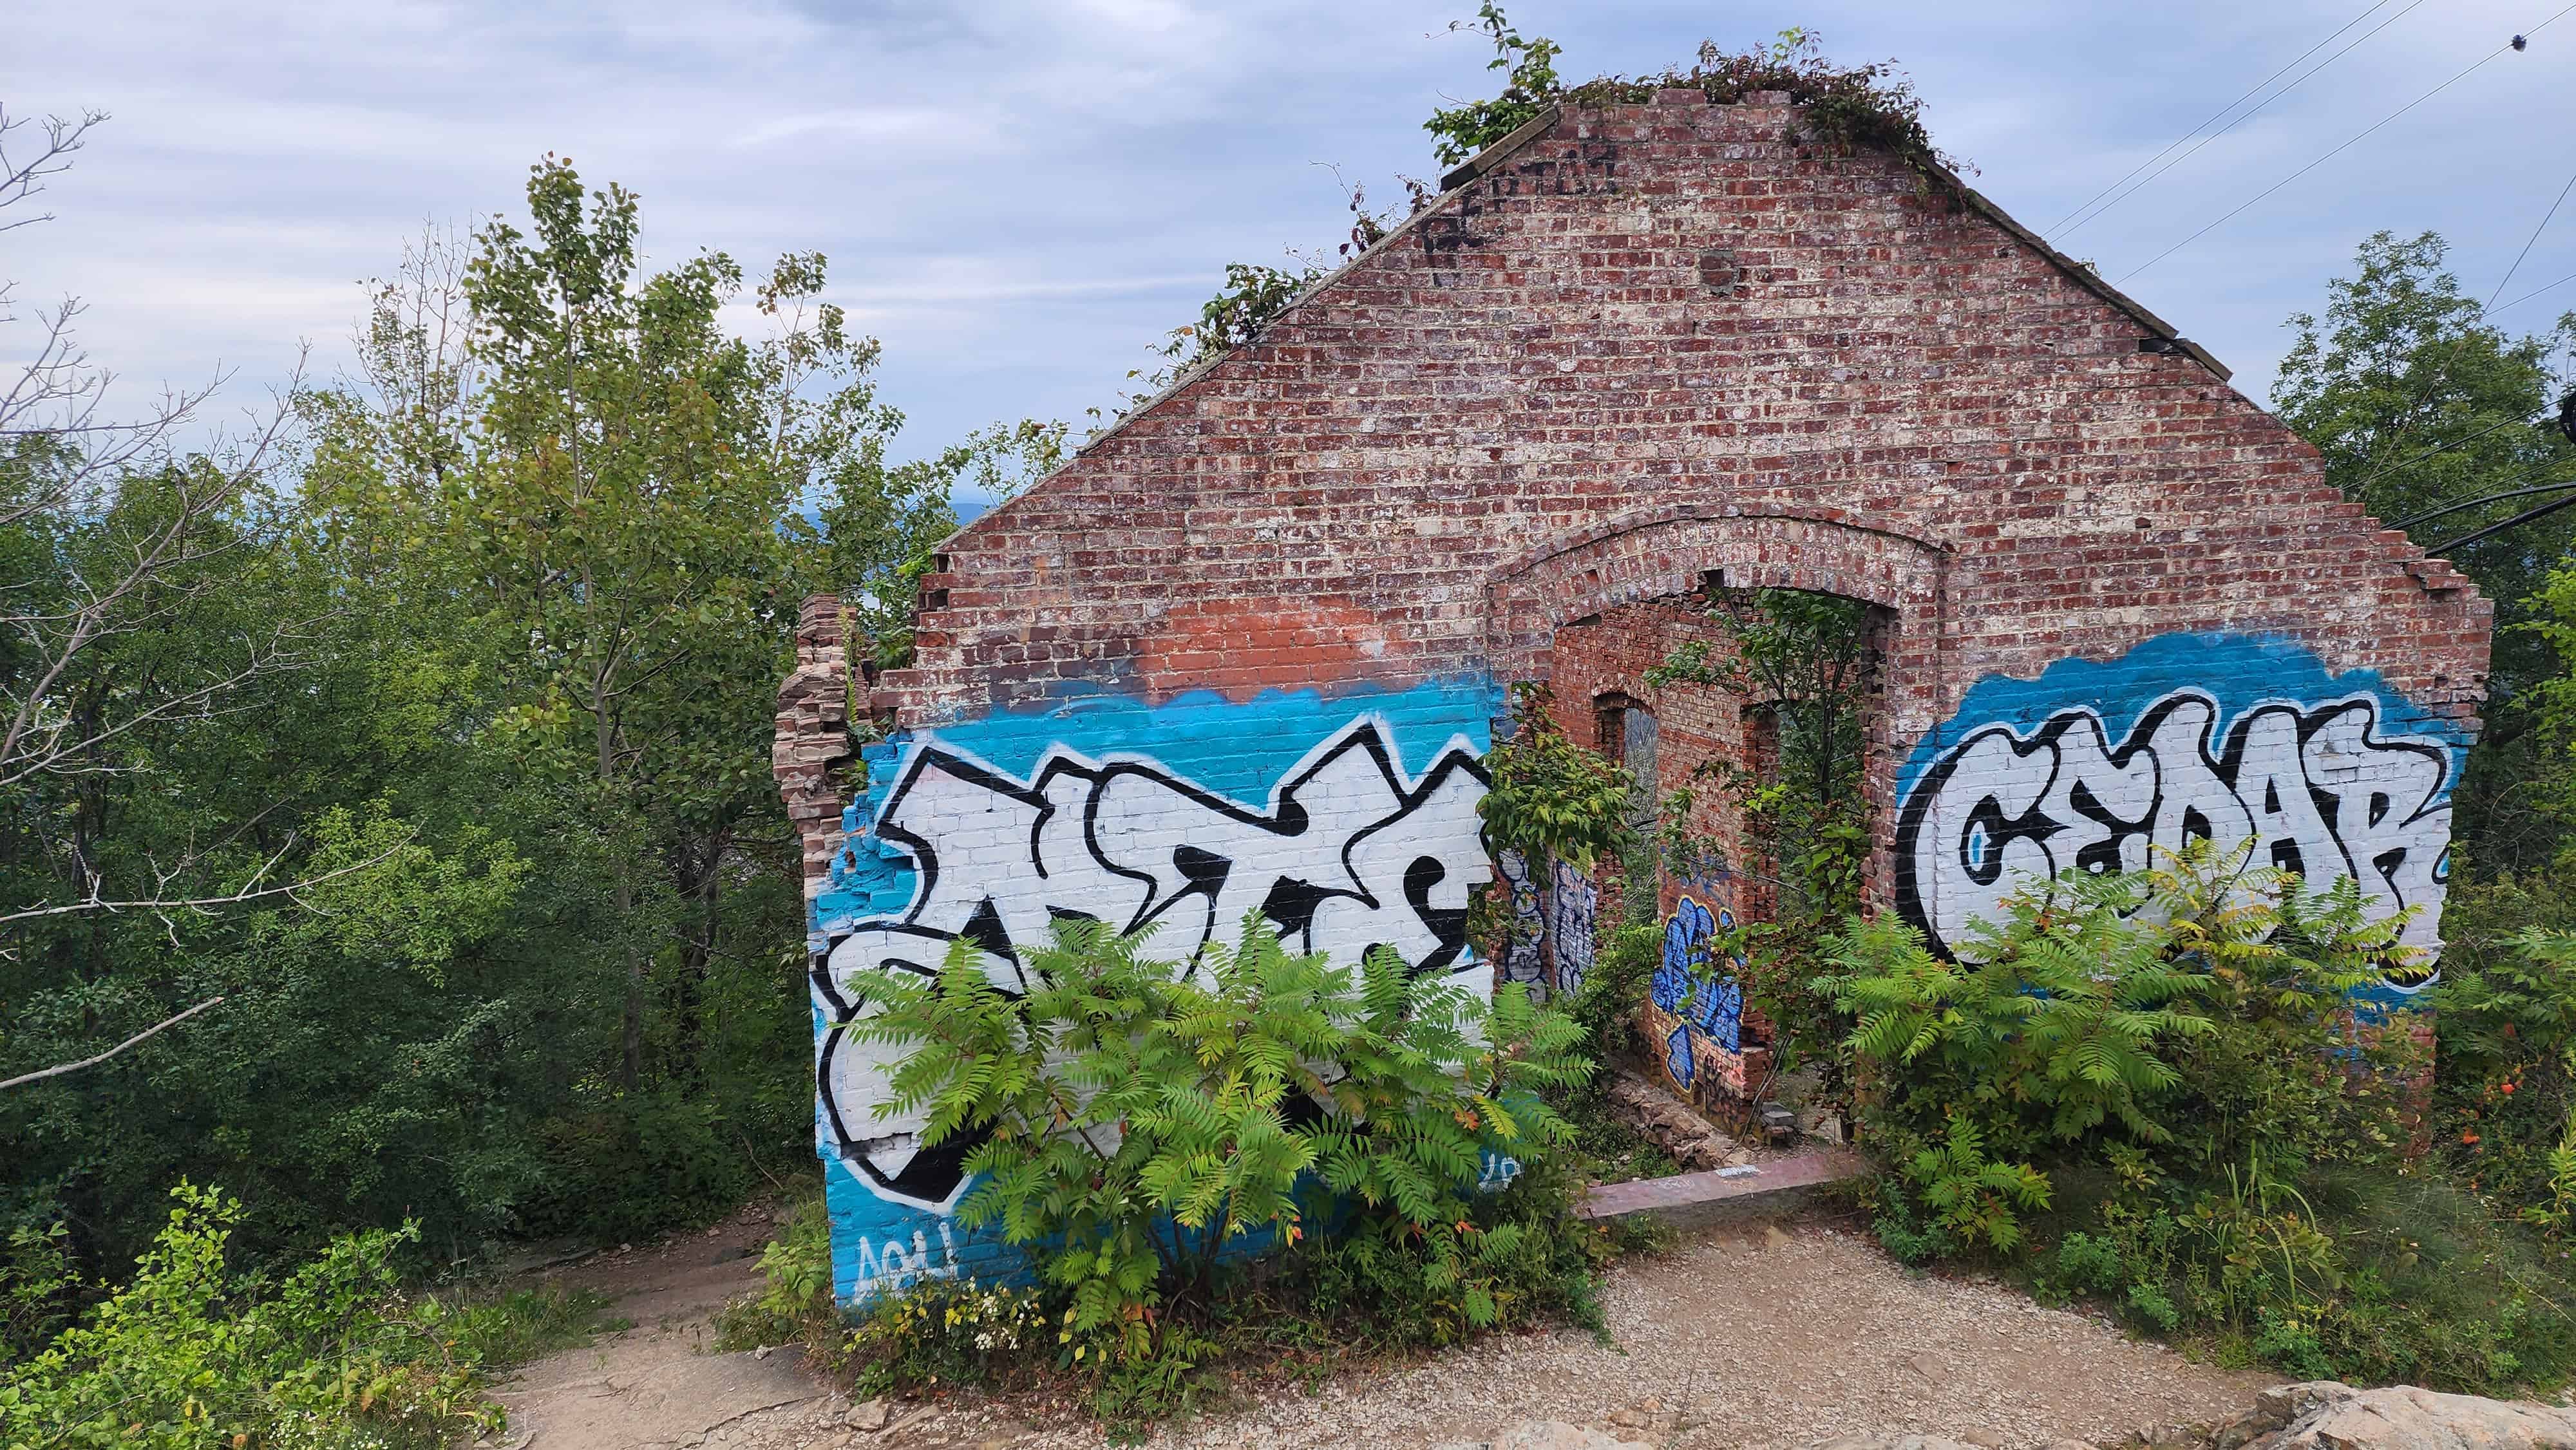 A ruined building covered in graffiti.